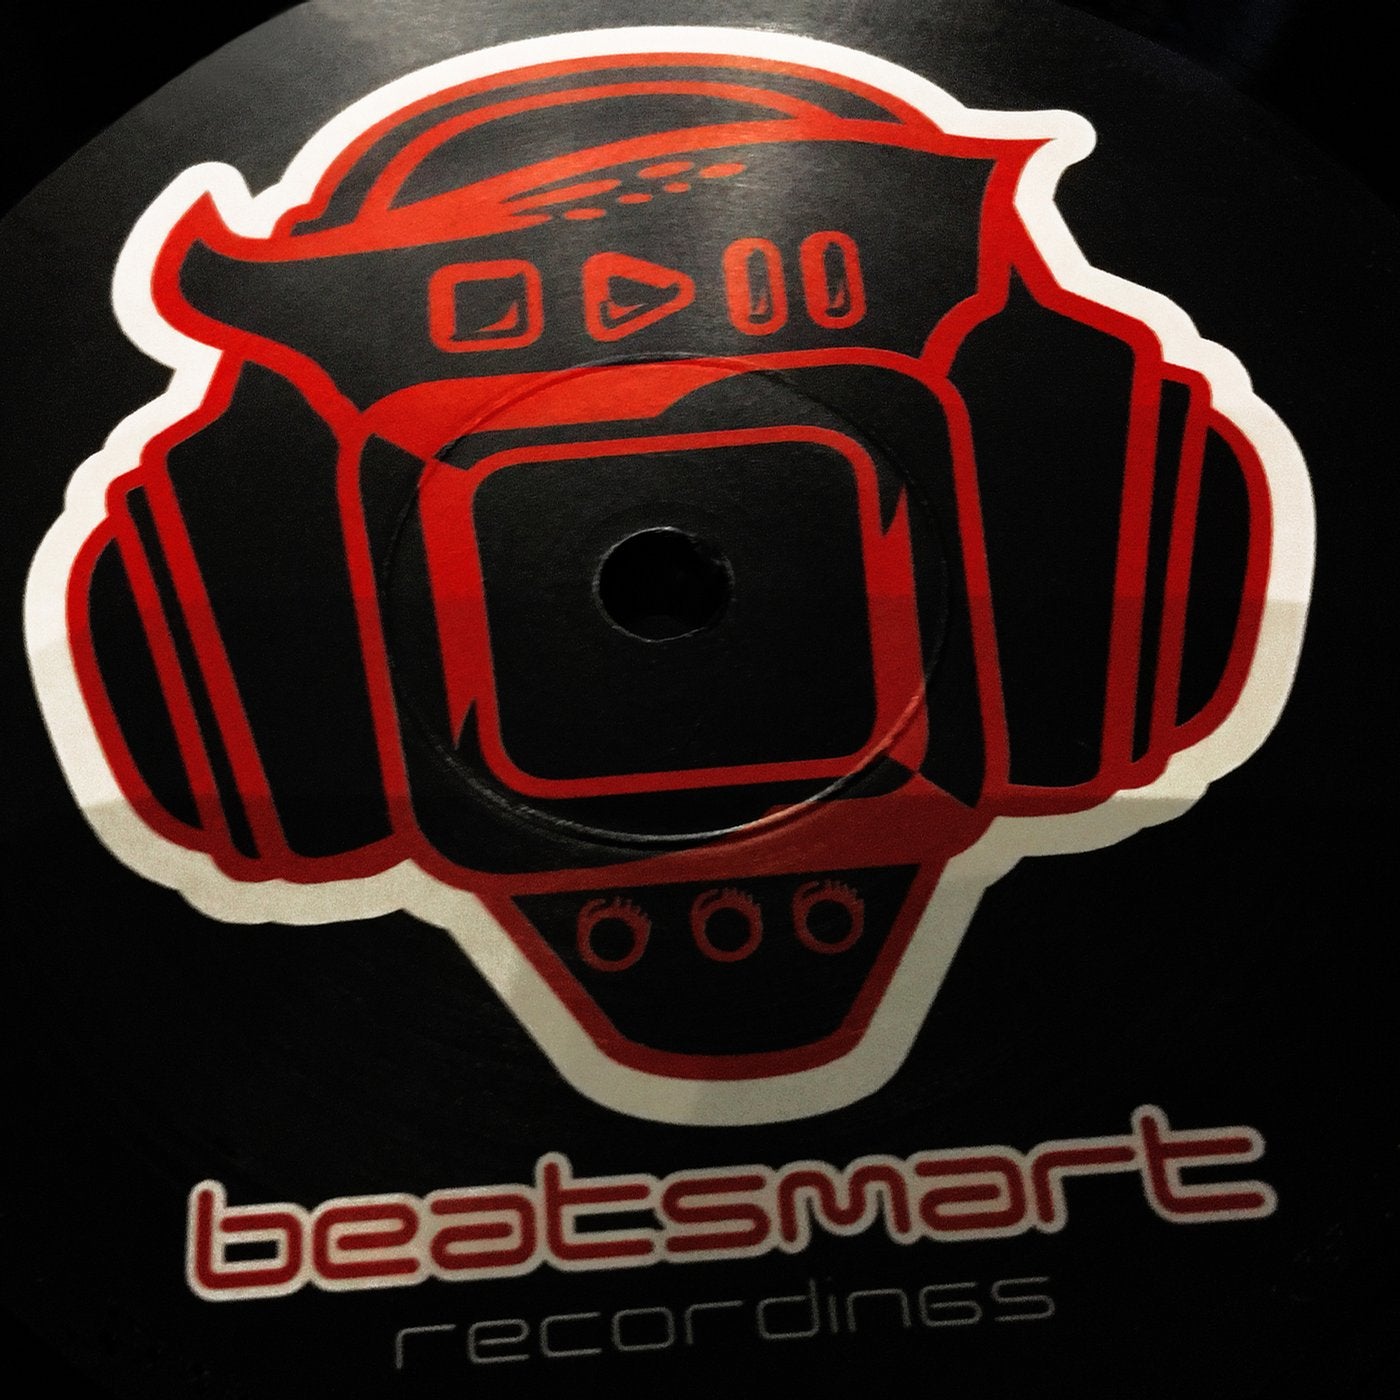 Beatsmart: The Drum & Bass Collection